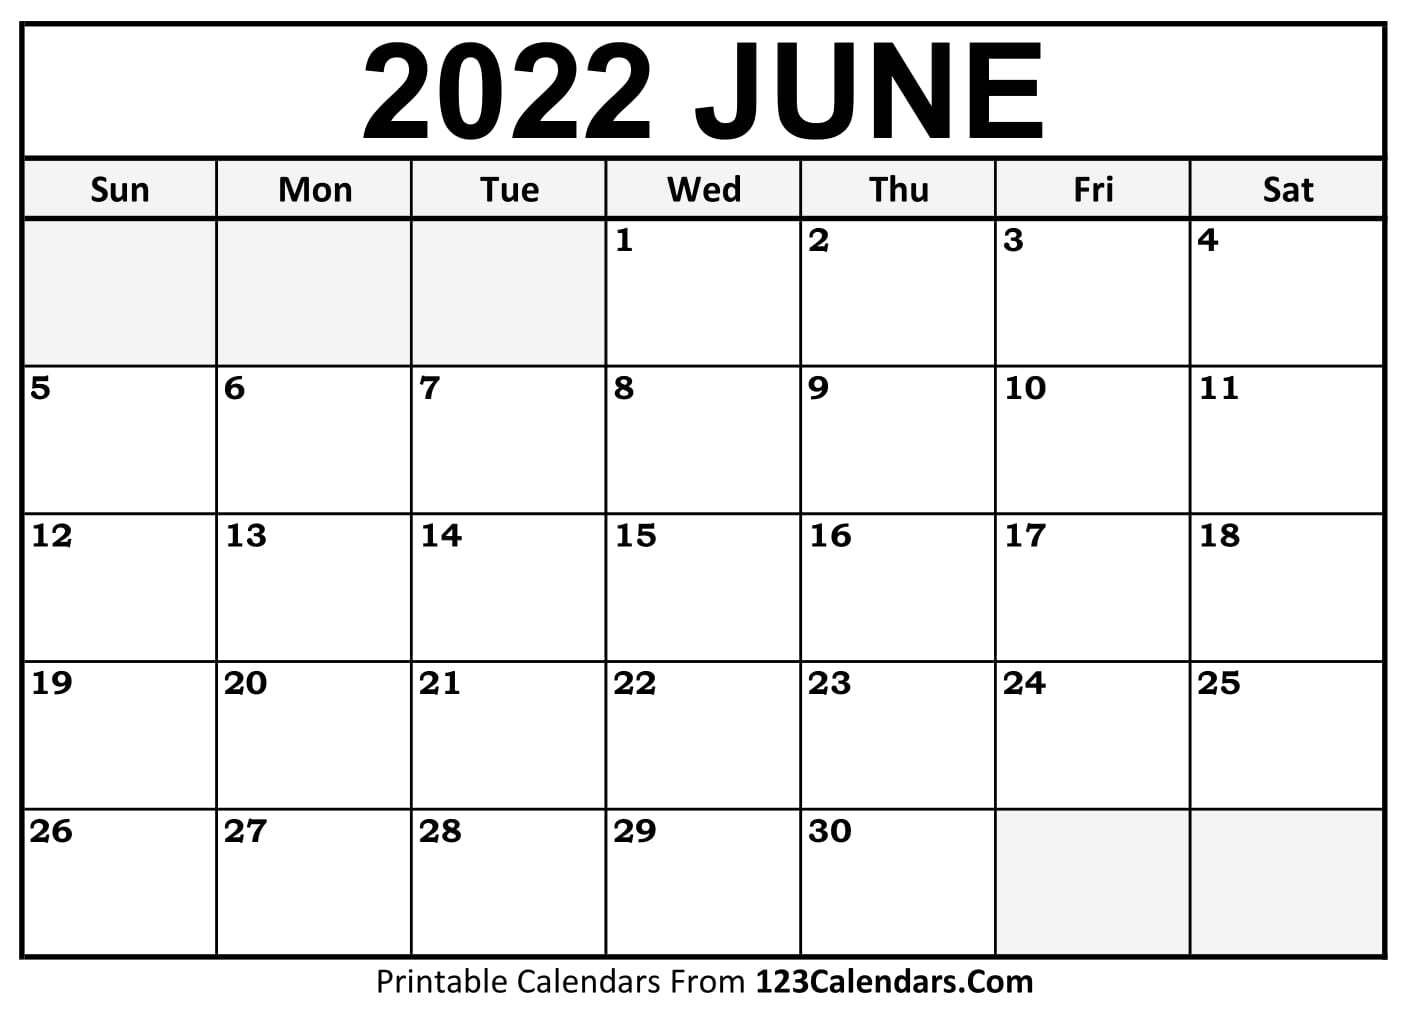 June Blank Calendar 2022 Printable June 2022 Calendar Templates - 123Calendars.com